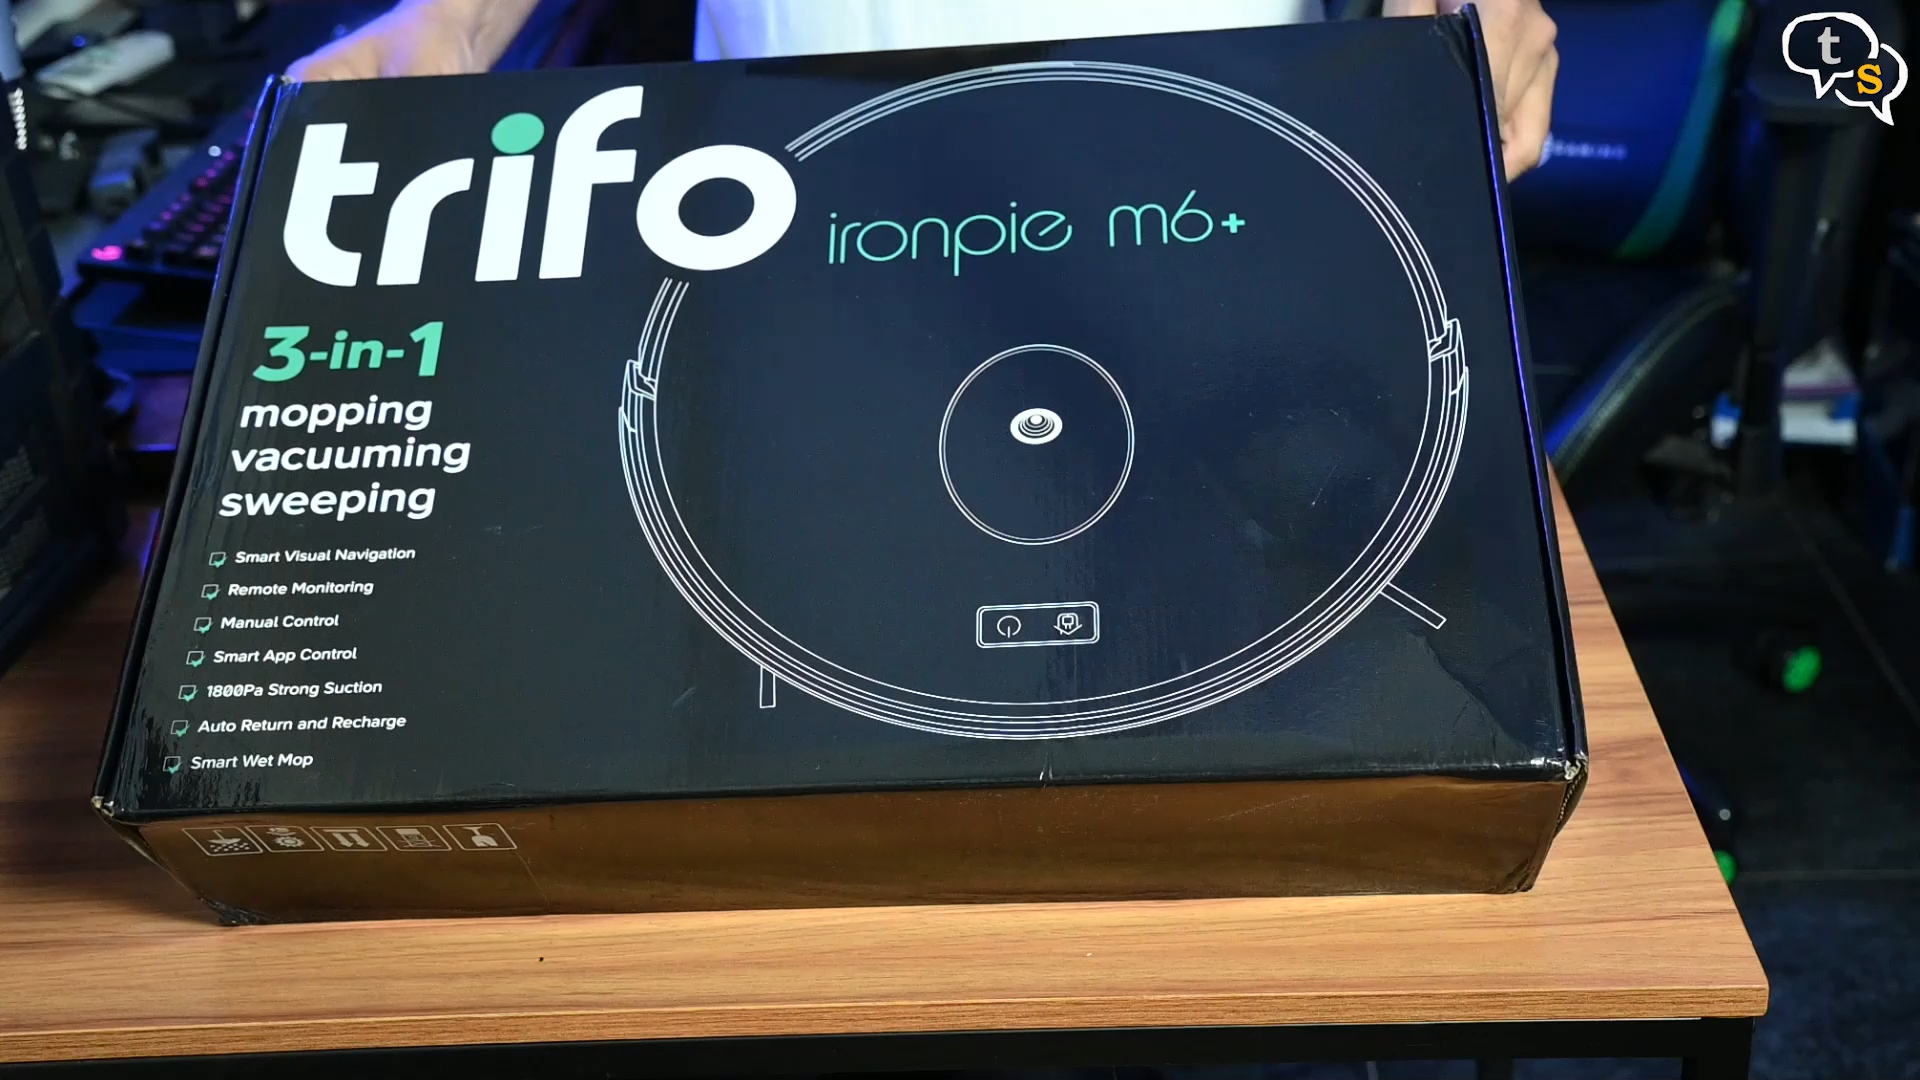 Trifo Ironpie m6+ box